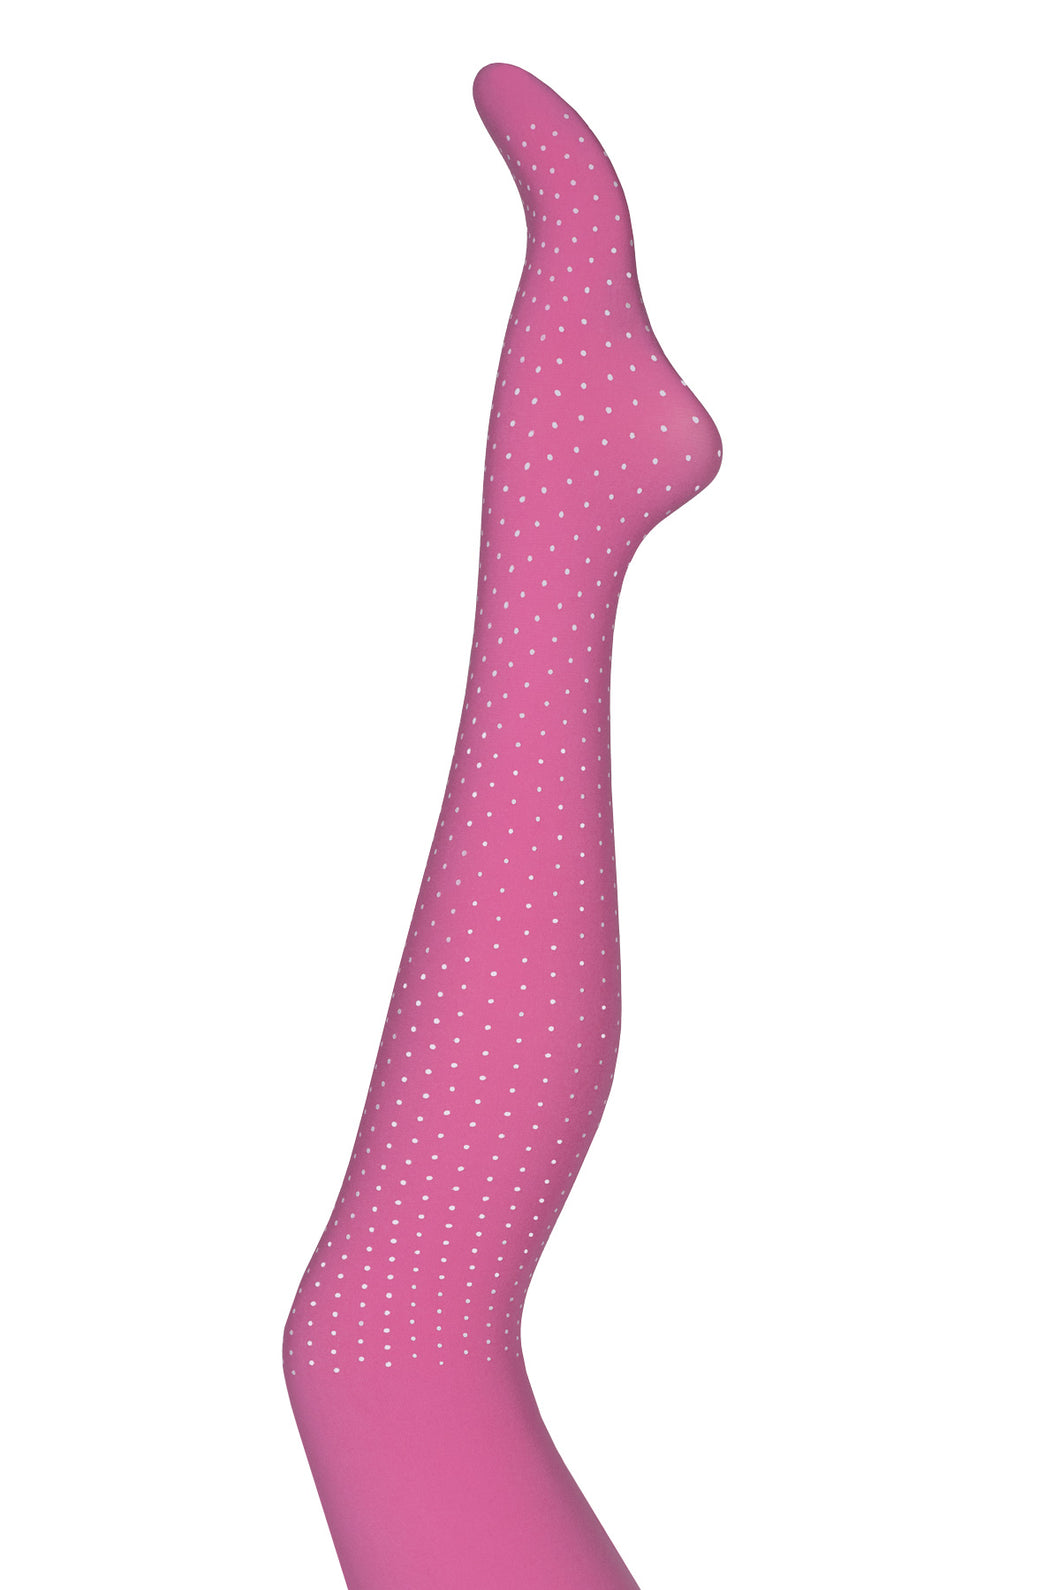 Verdens beste og kuleste strømpebukse i kraftig rosa prikket spandex kvalitet onesize